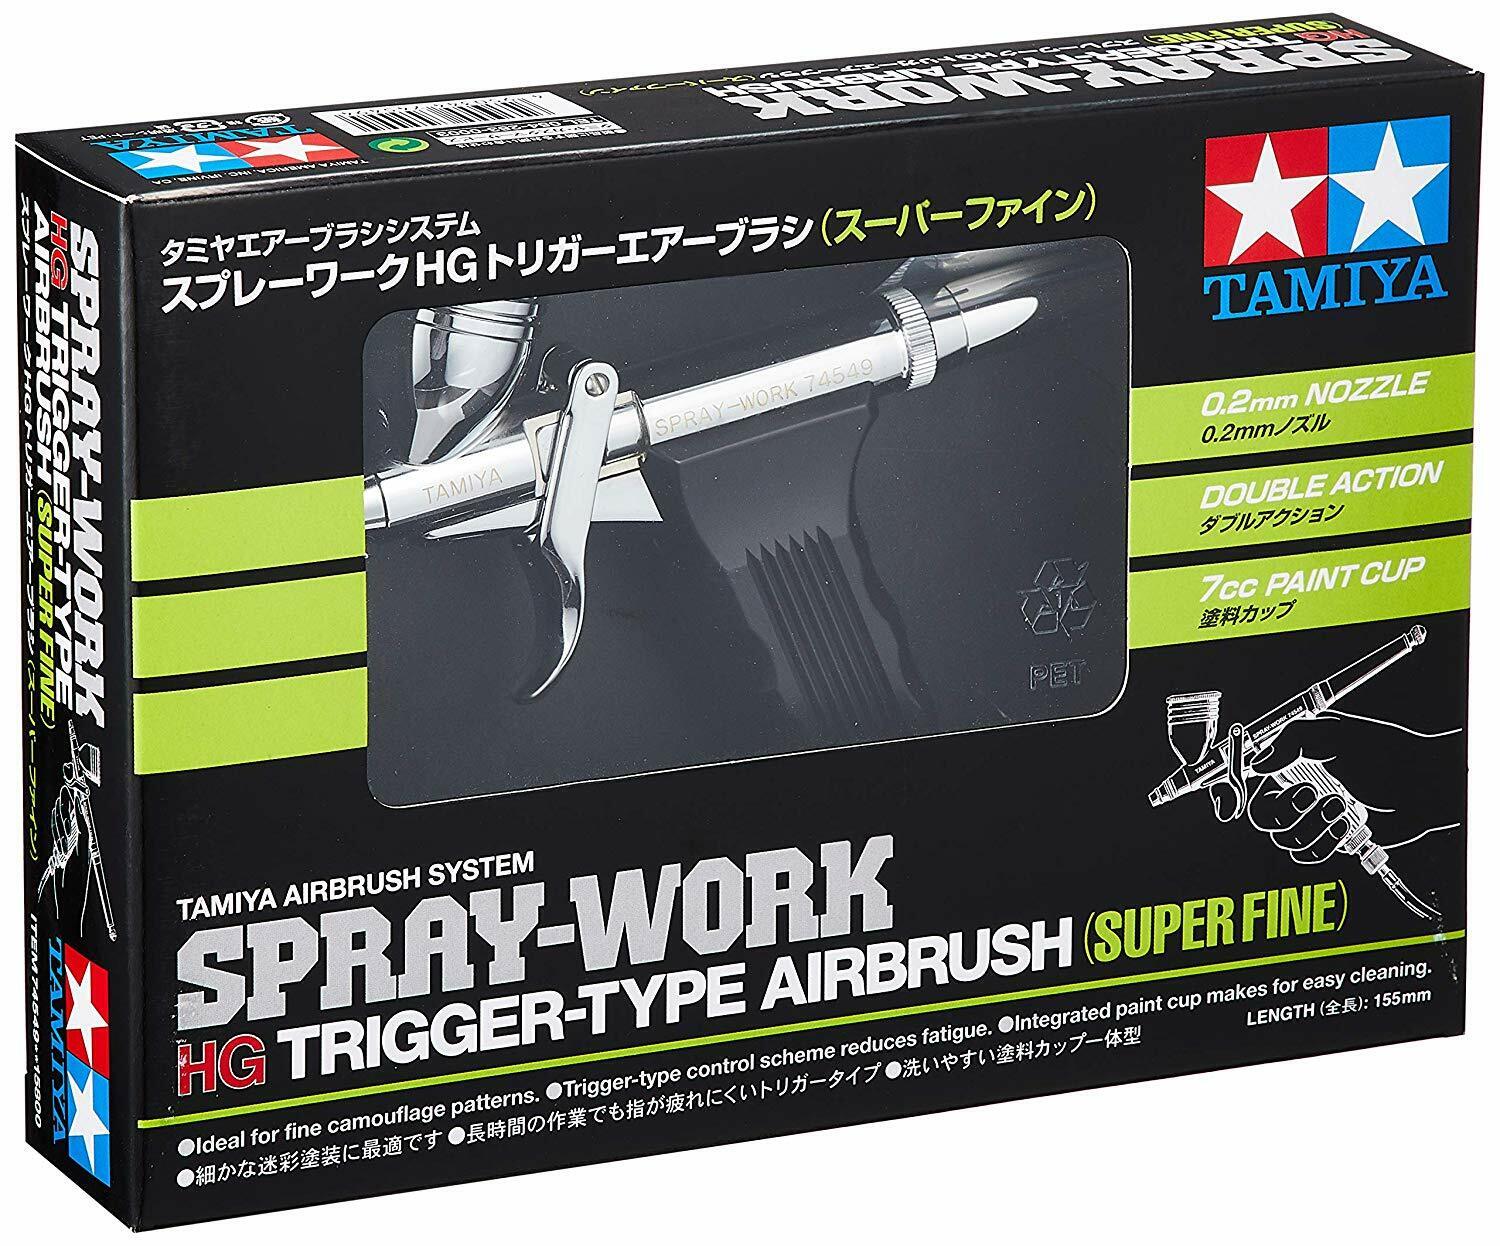 Tamiya 74549 SPRAY-WORK HG Trigger-Type Airbrush Super Fine 0.2mm Nozzle